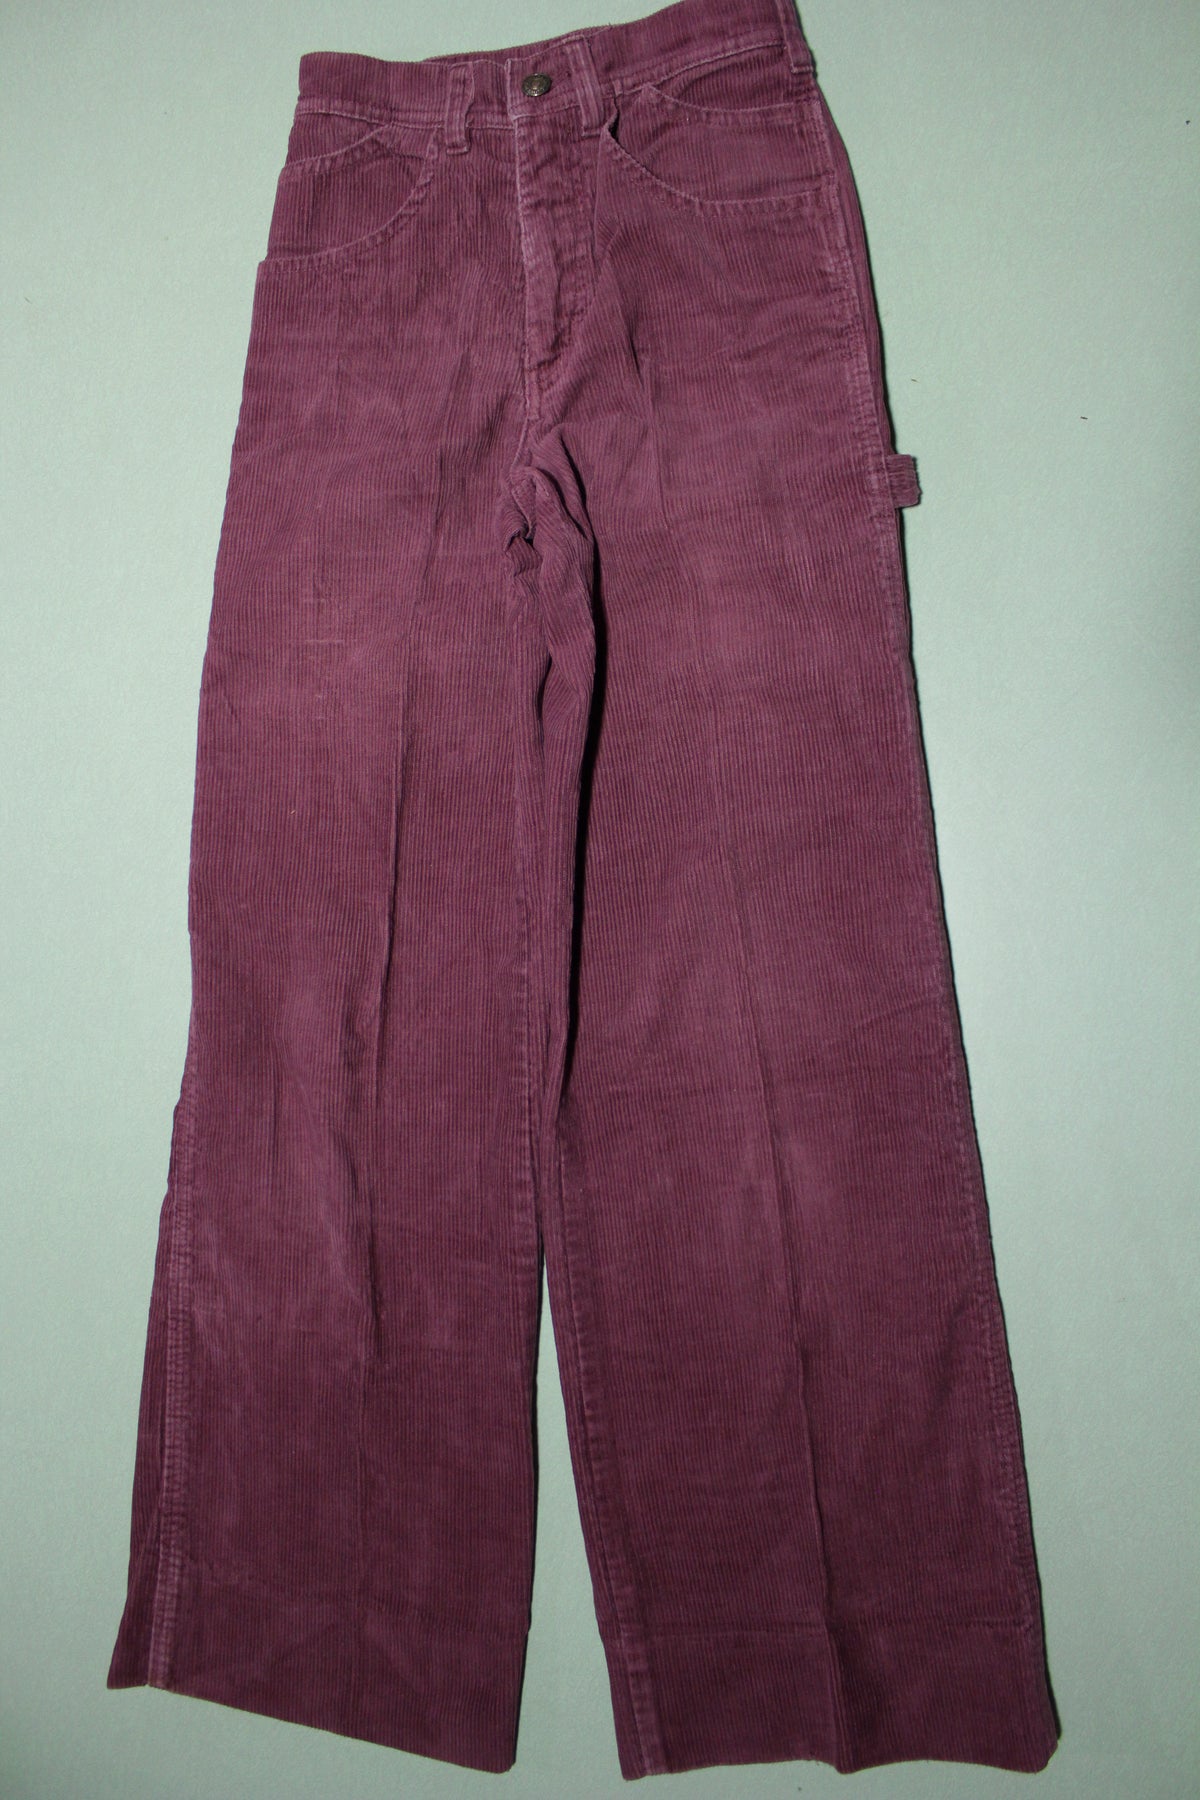 Lawman Corduroy Vintage 70's Talon 42 Bell Bottom Pink Purple Jeans / Utility  Western Pants